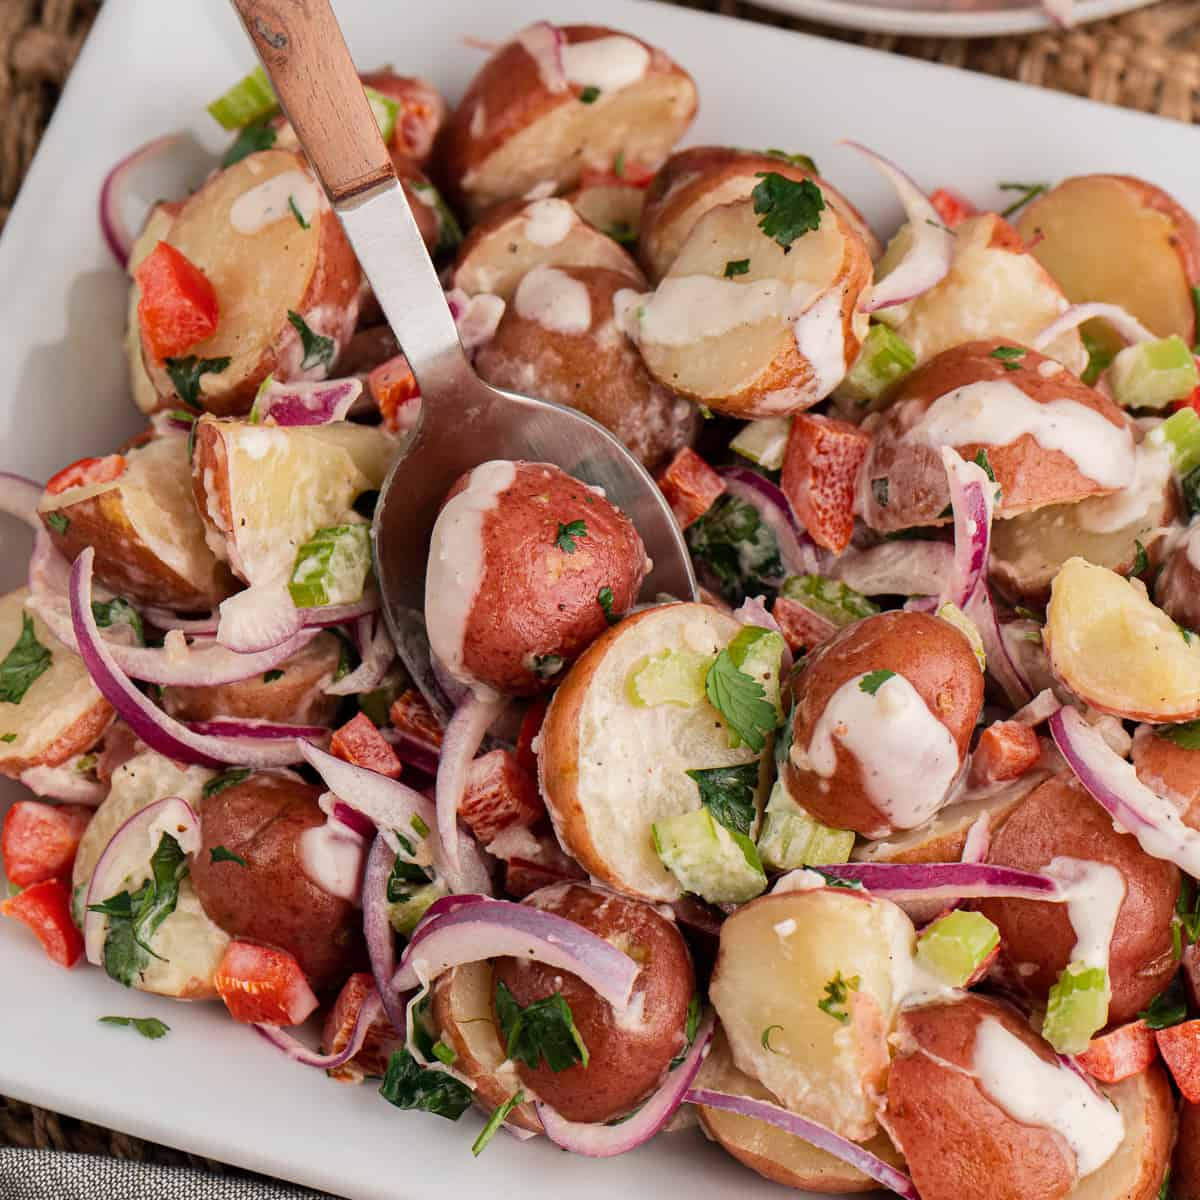 Red potato salad